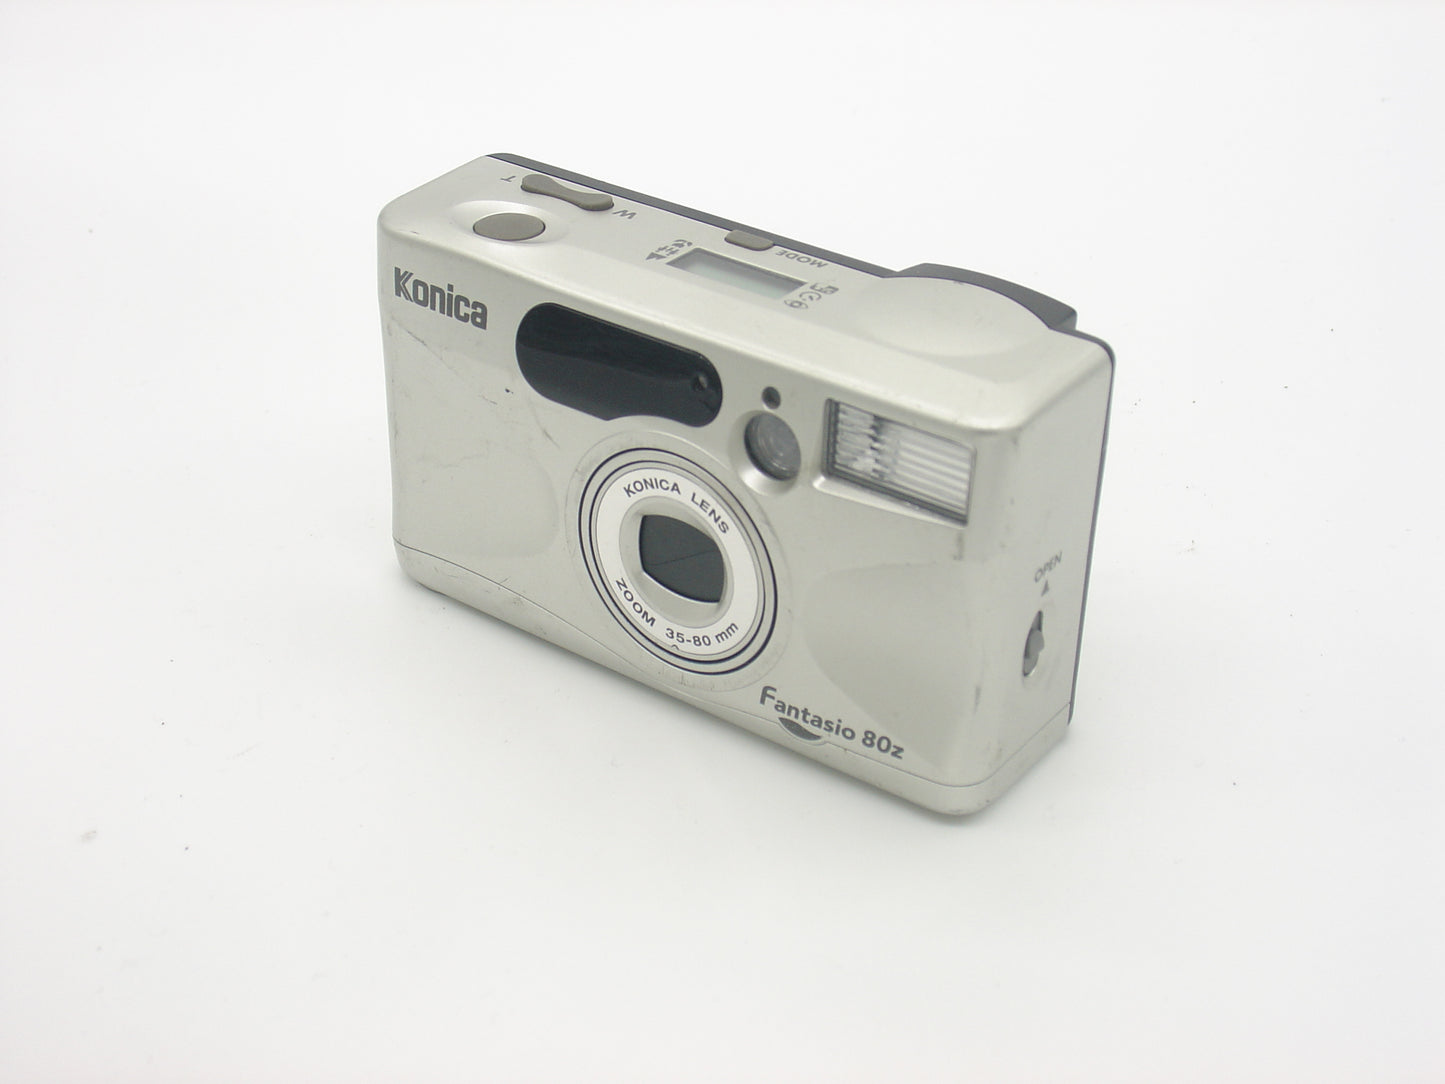 Konica Fantasio 80Z - very compact film camera